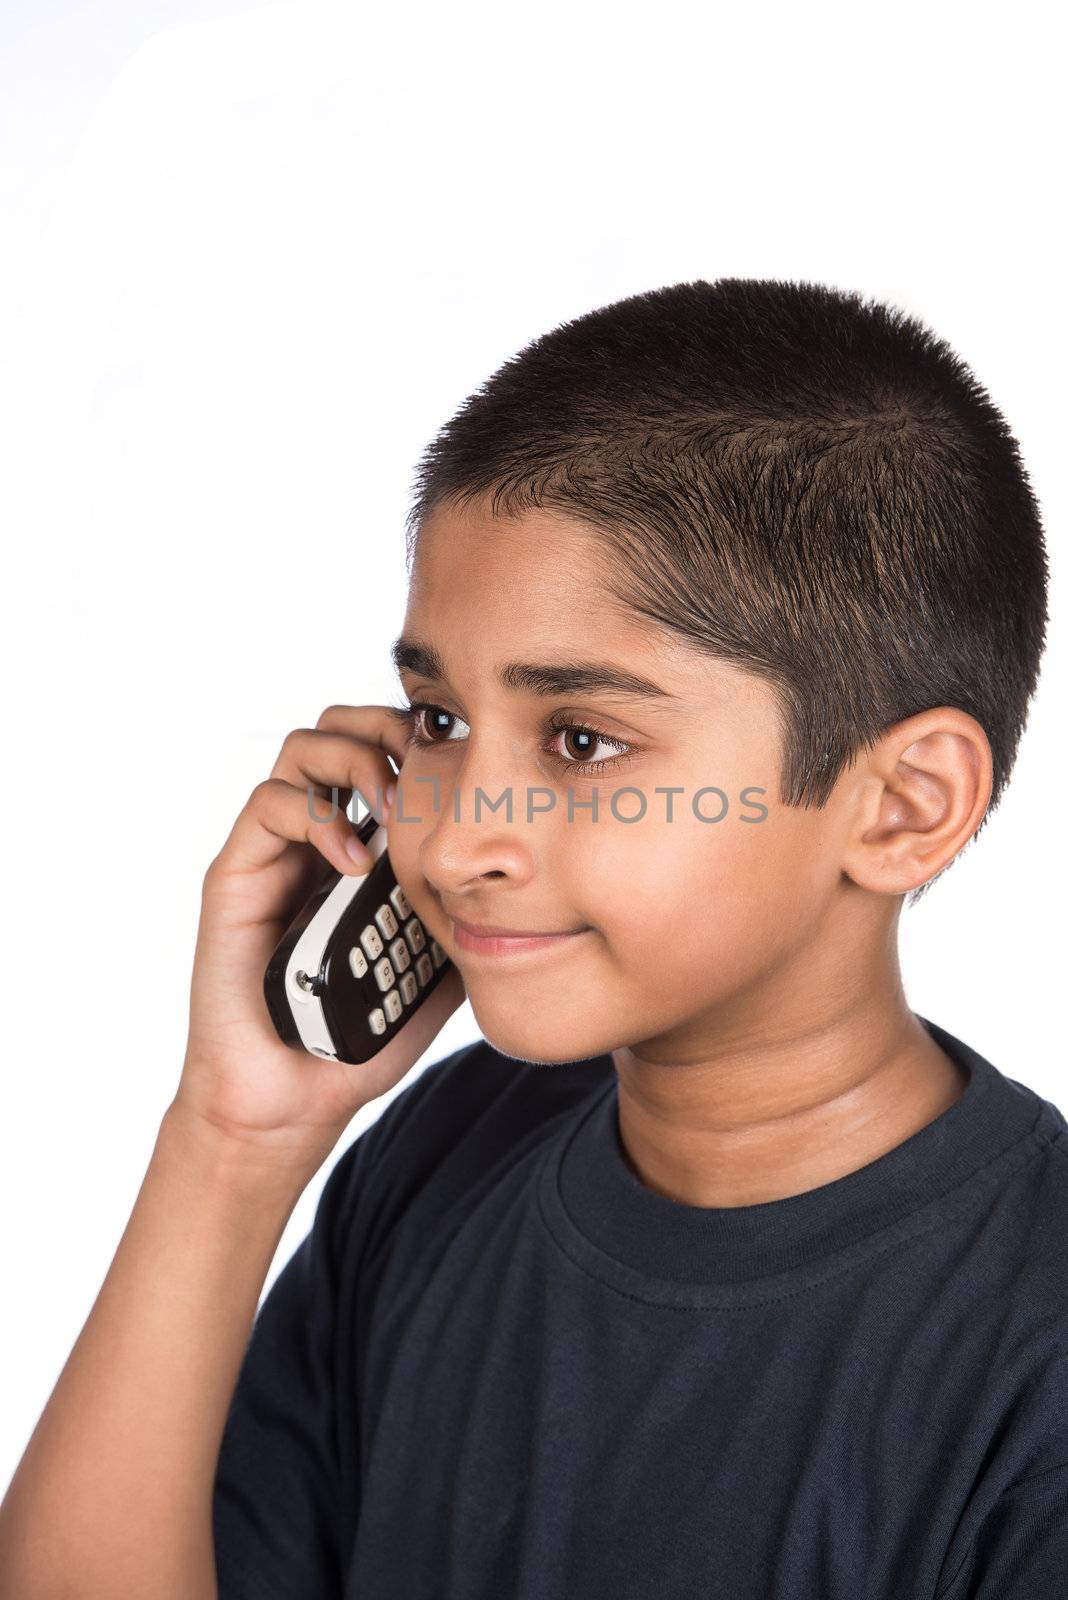 Handsome Indian kid looking very happy talking on phone